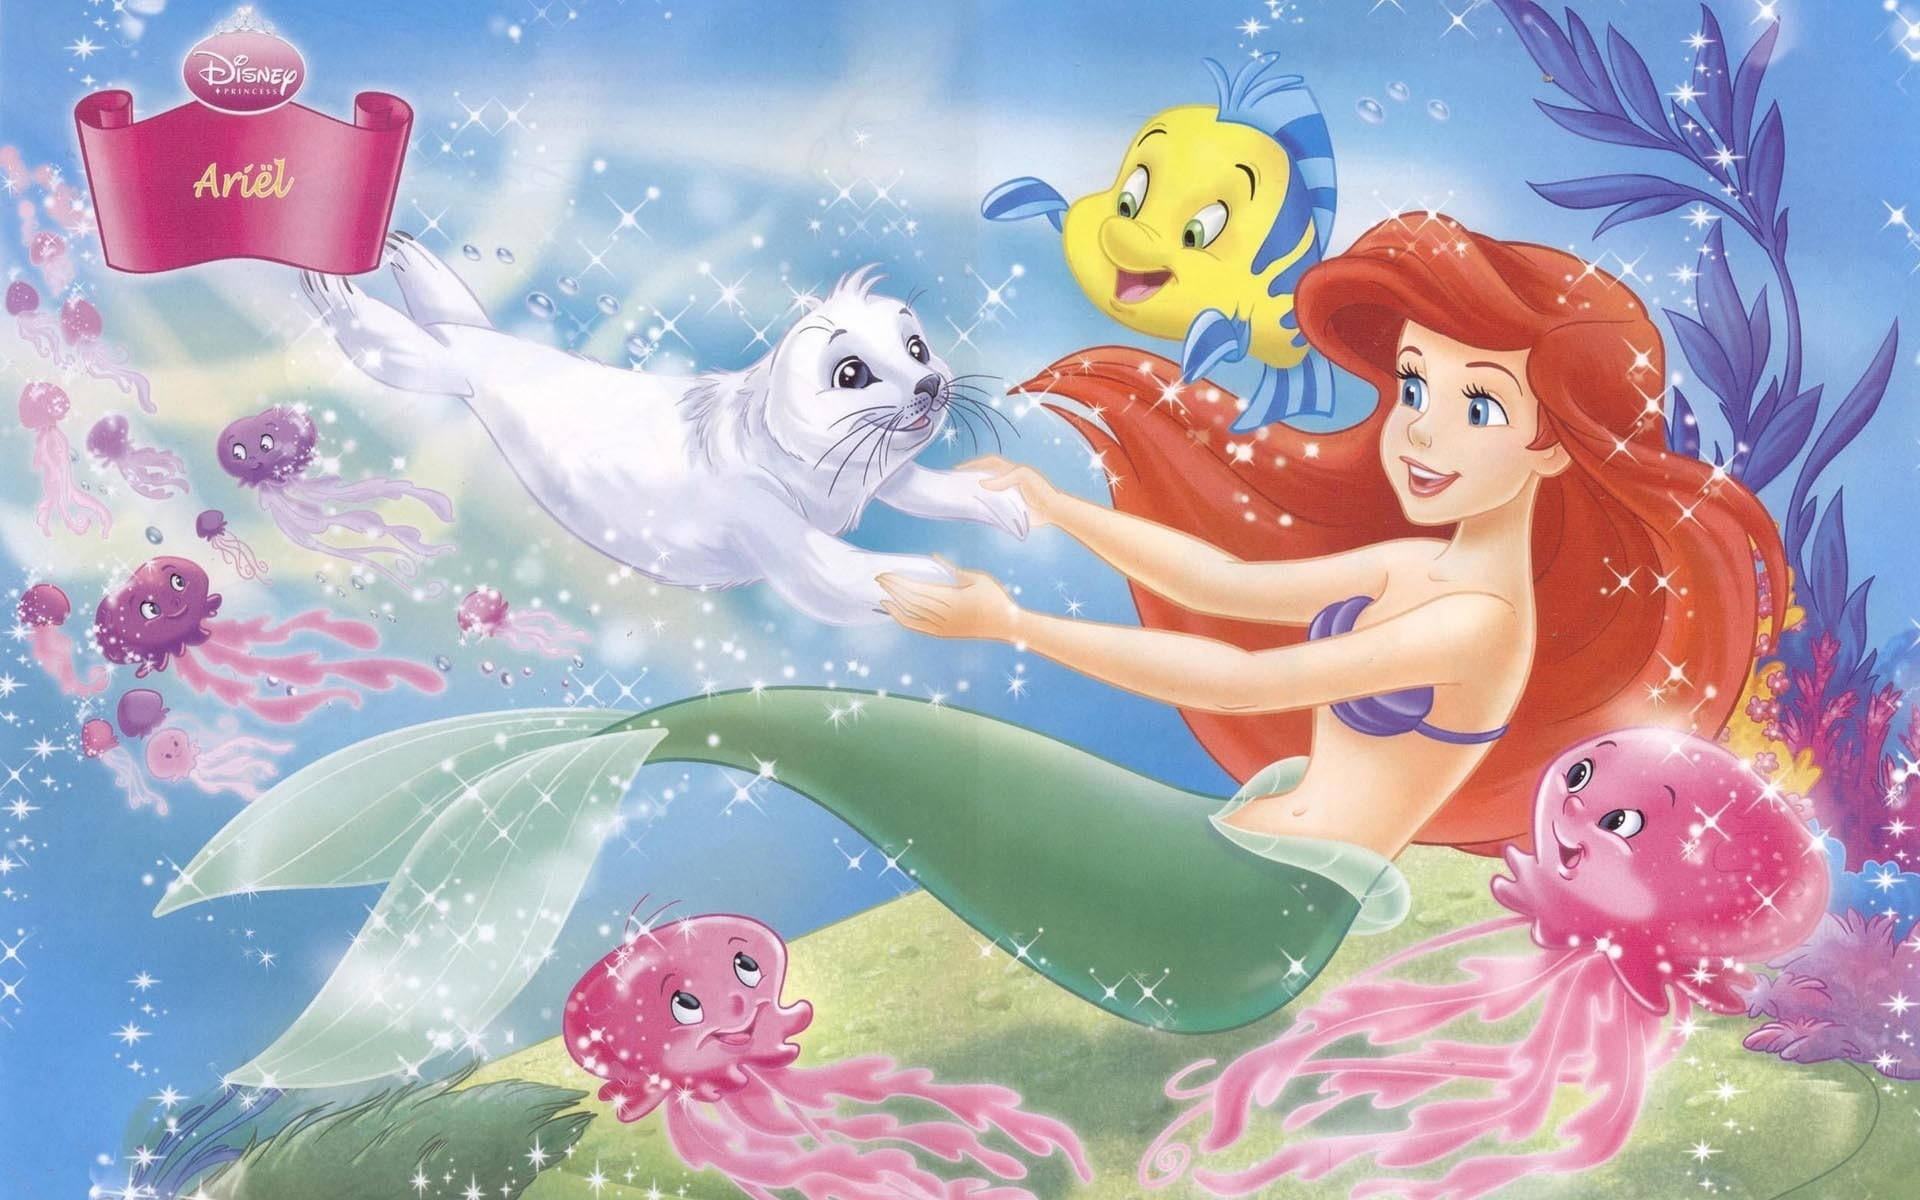 Disney Ariel And Friends Wallpaper